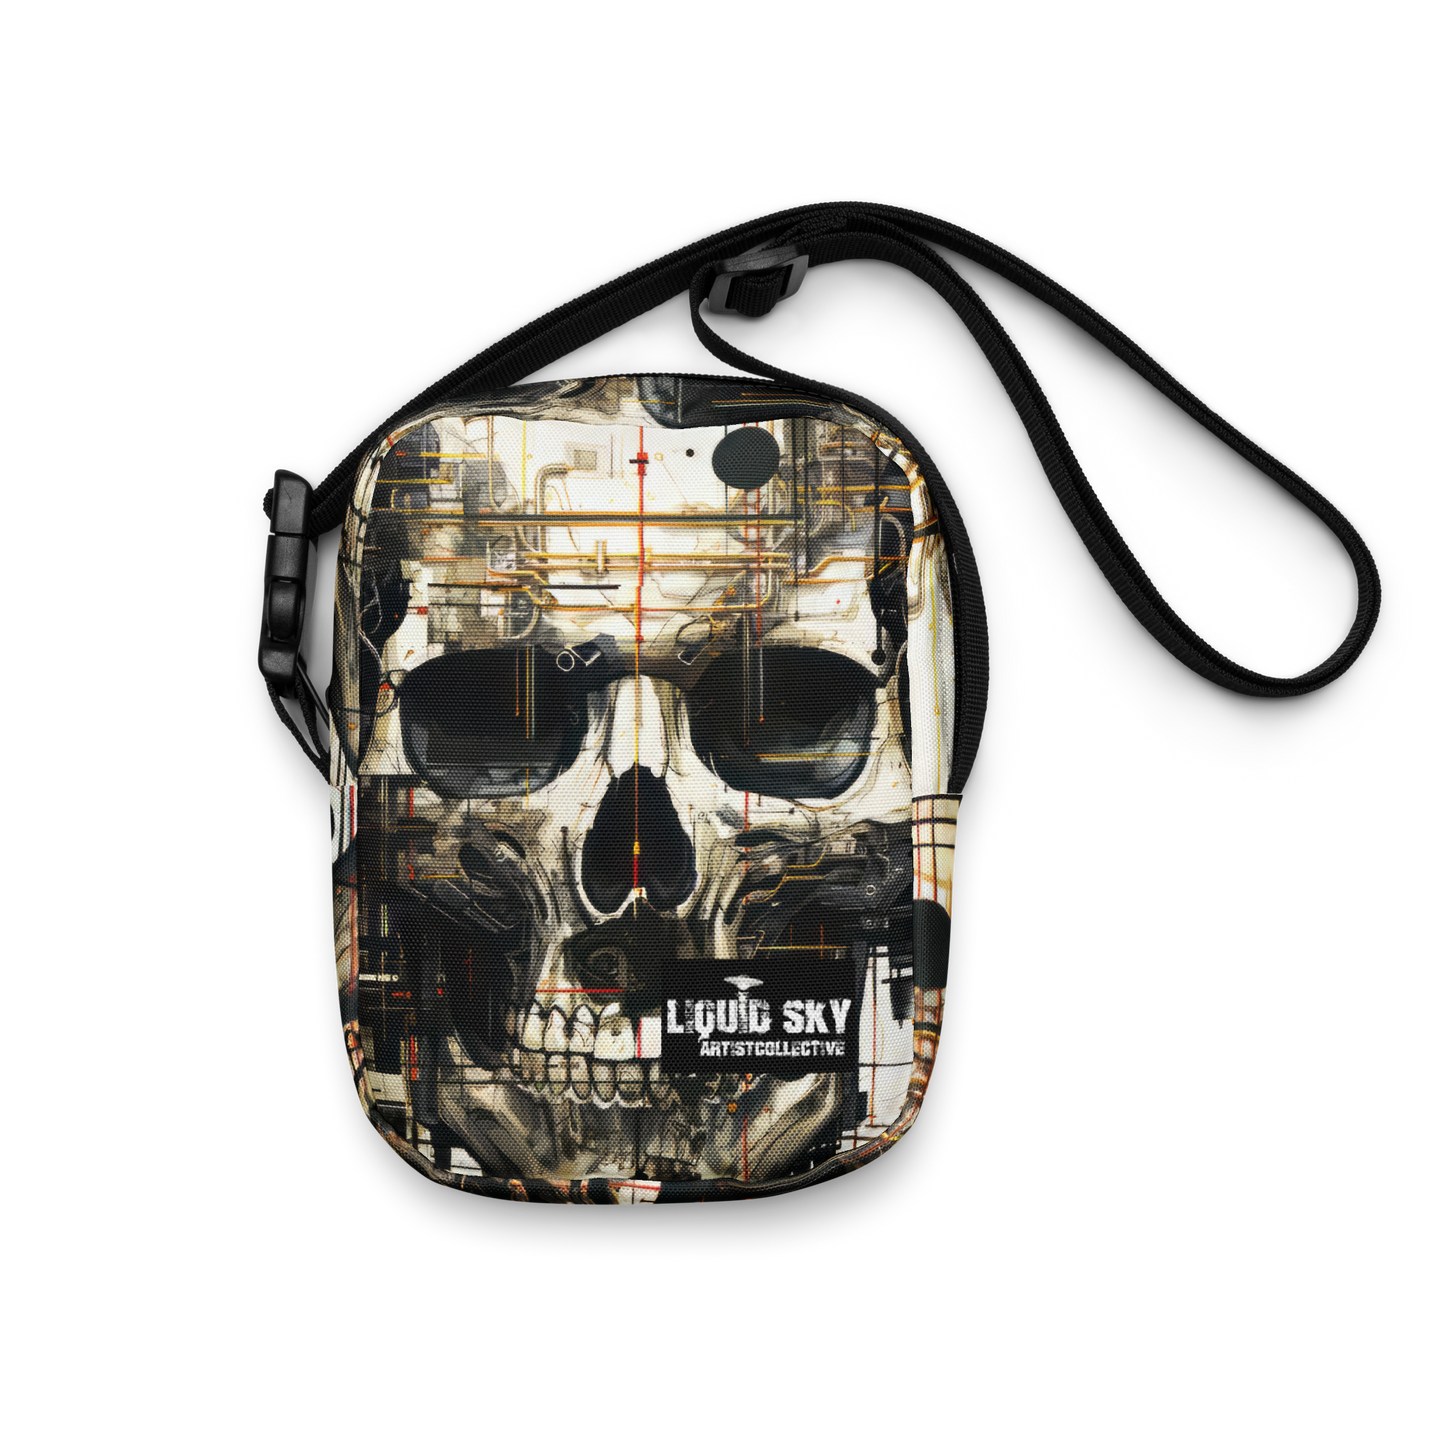 Bauhaus Art Skull - Smartphone / iPad Mini / actioncam / fieldrecording utility bag